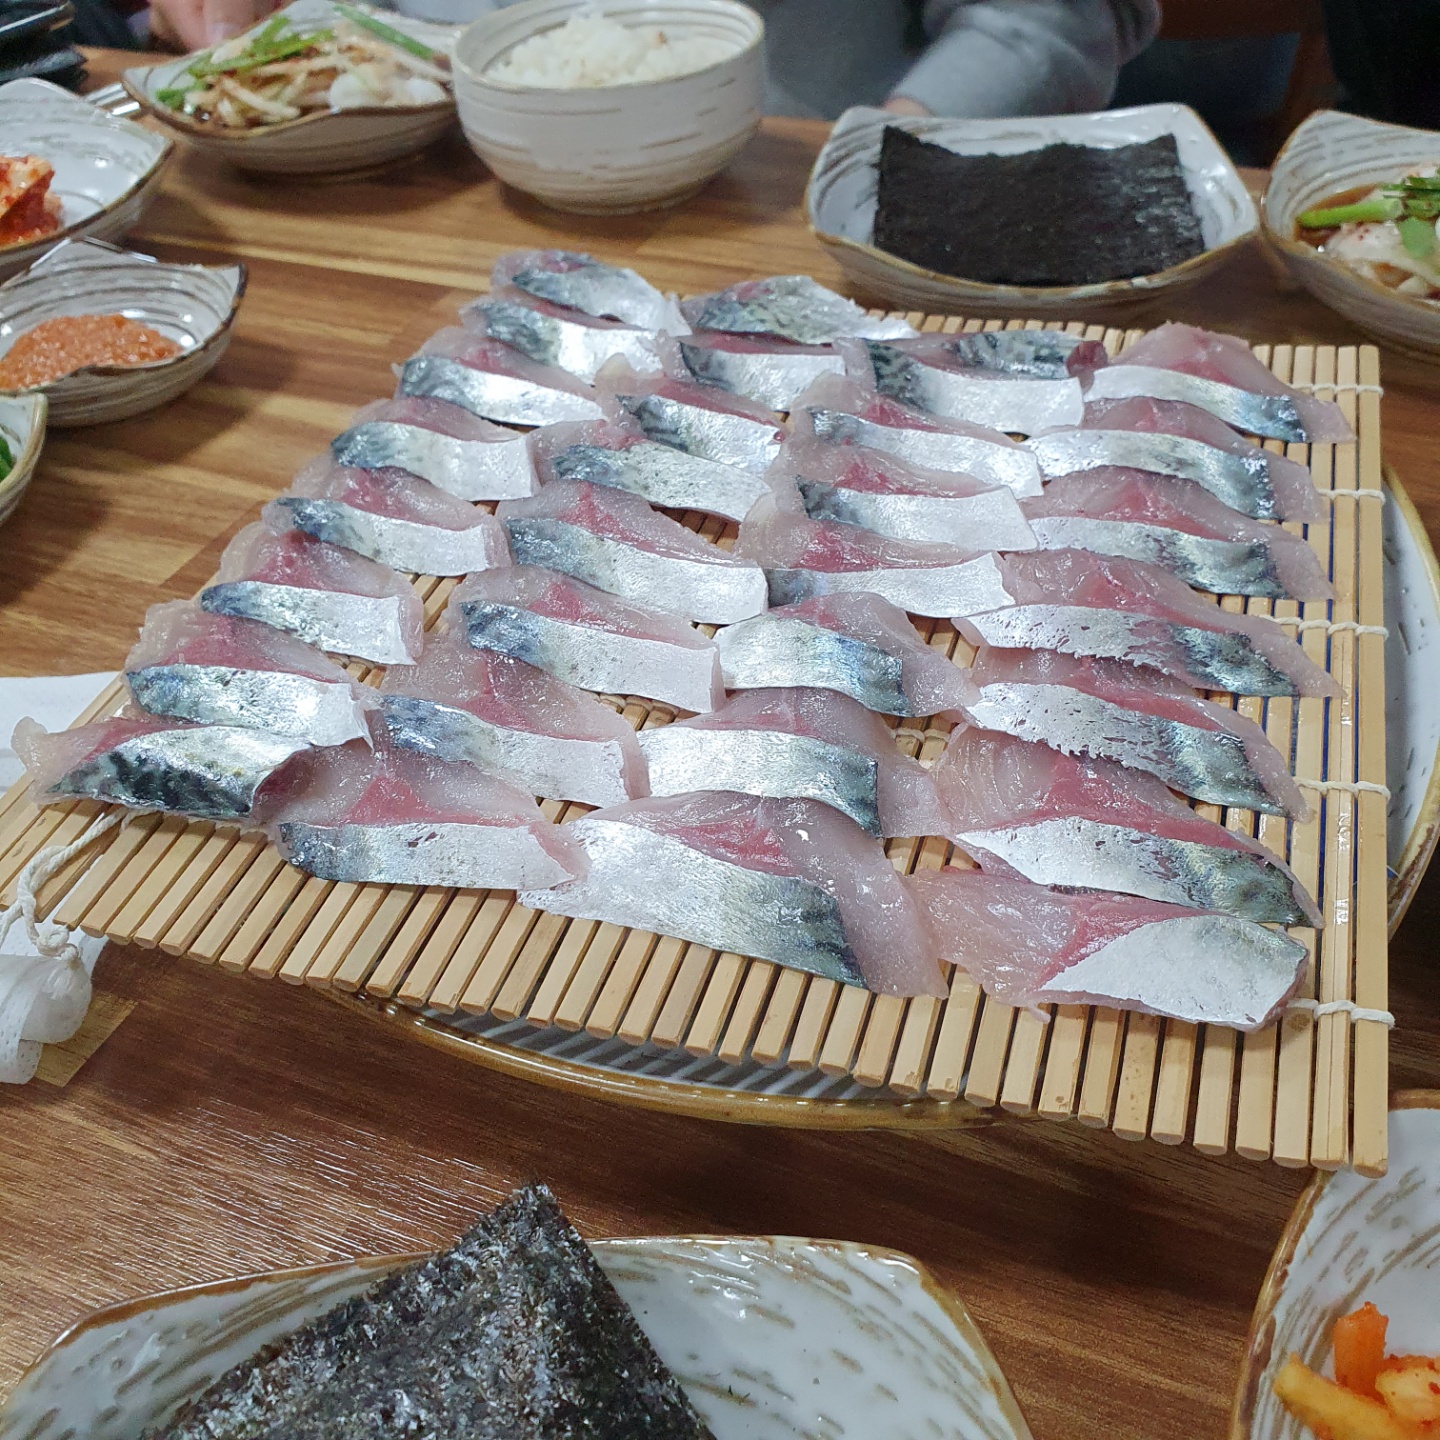 Raw mackerel